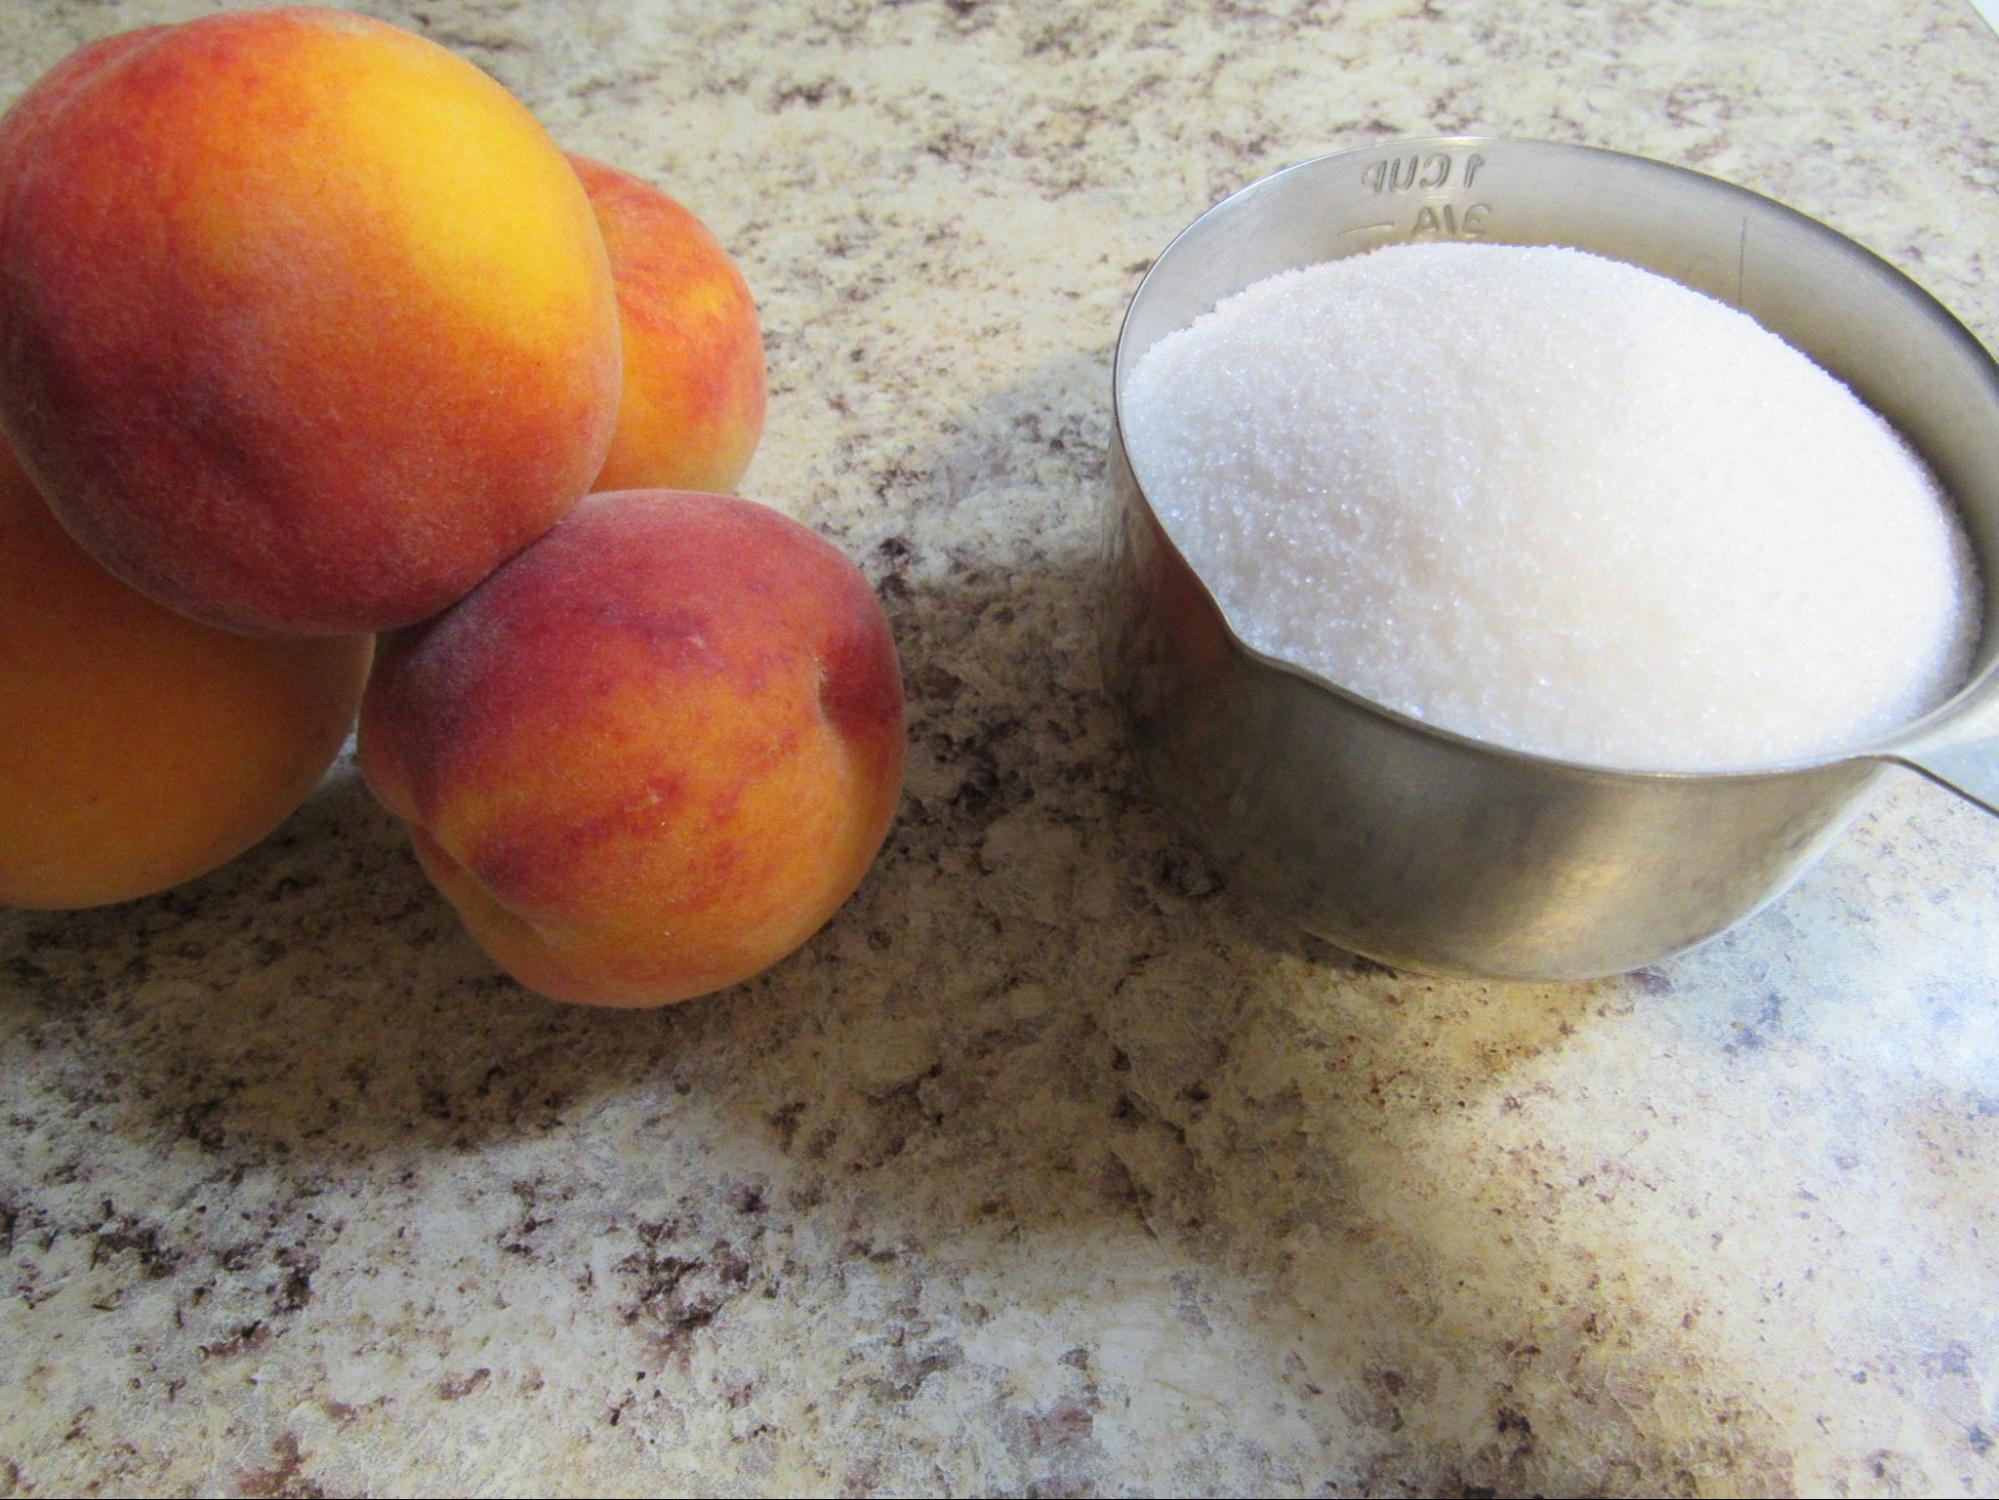 #AD Sweet Peach Iced Tea Recipe #HowSweetAreYou #Sweetbutnottoosweet #SweetLeaf @SweetLeafTea